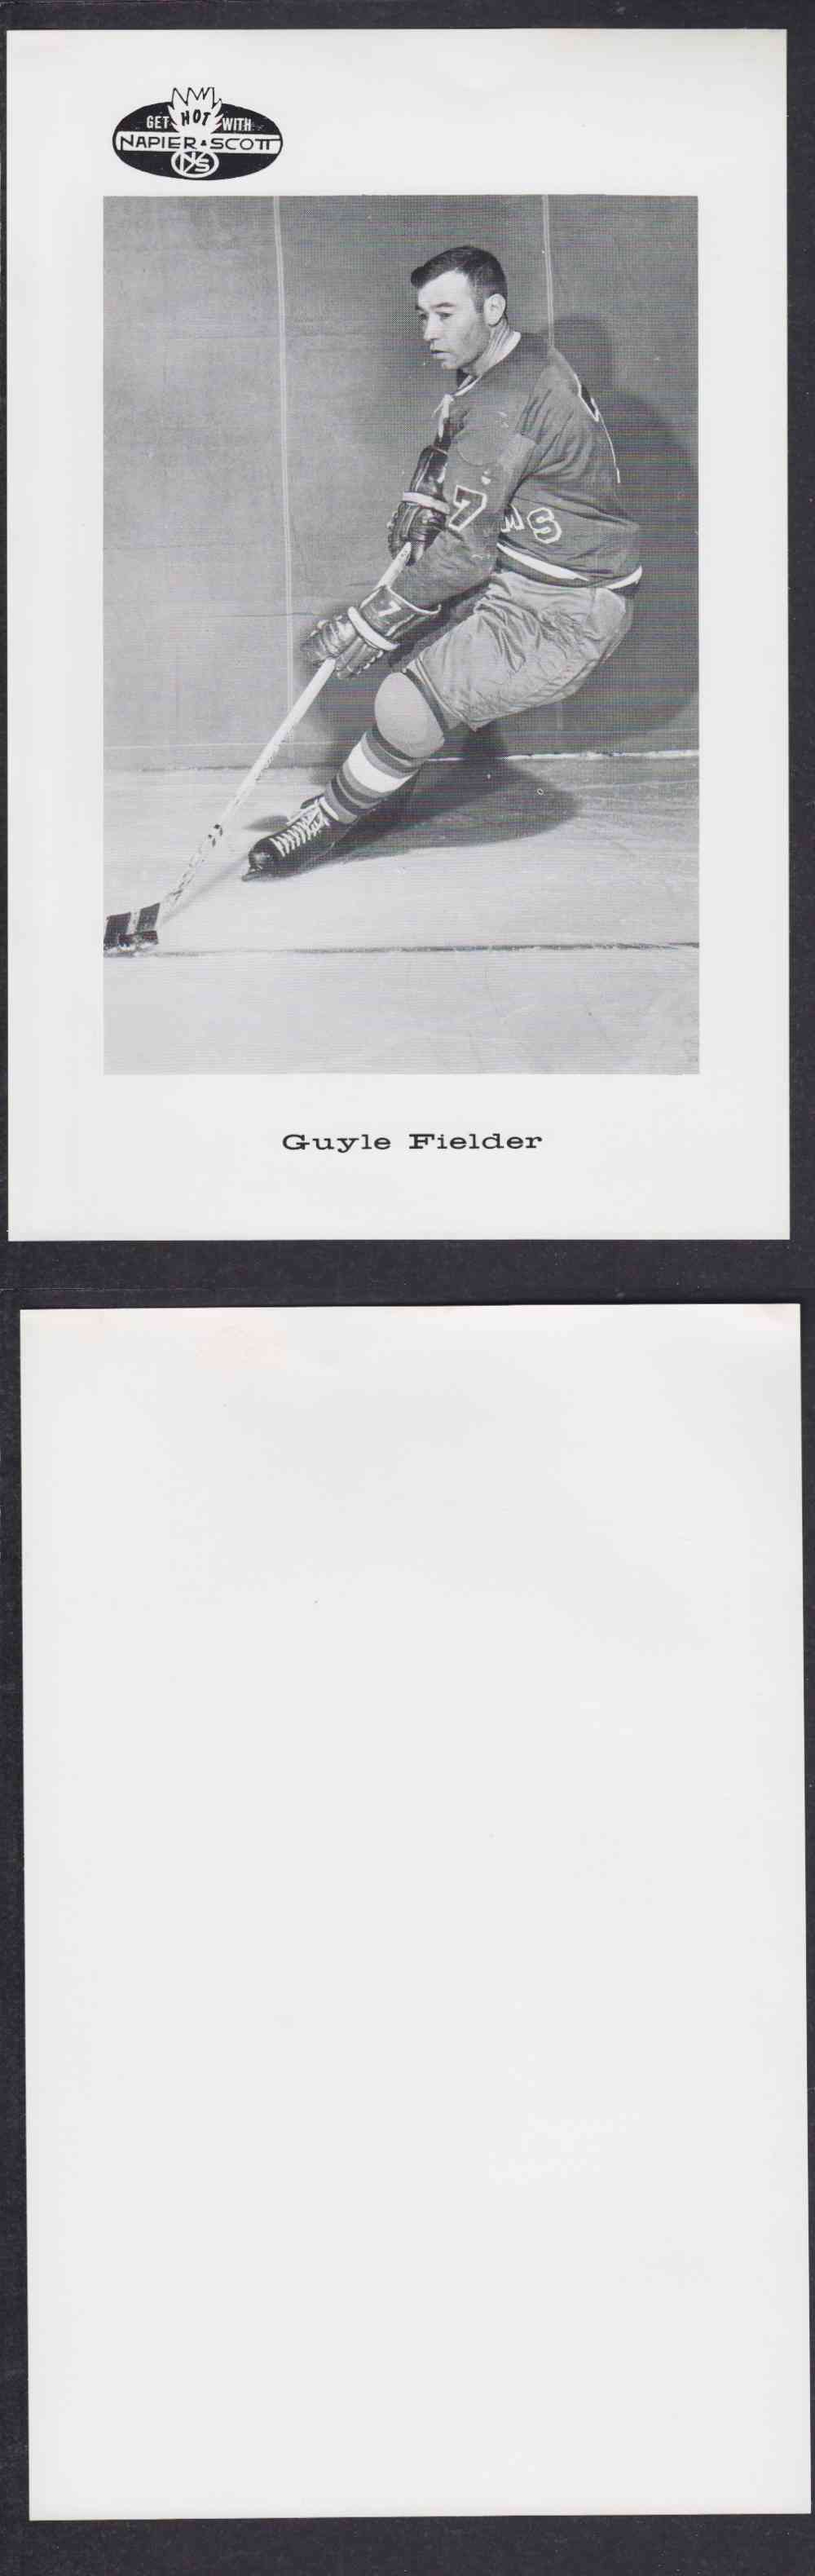 1960'S SEATTLE TOTEMS PHOTO G. FIELDER photo